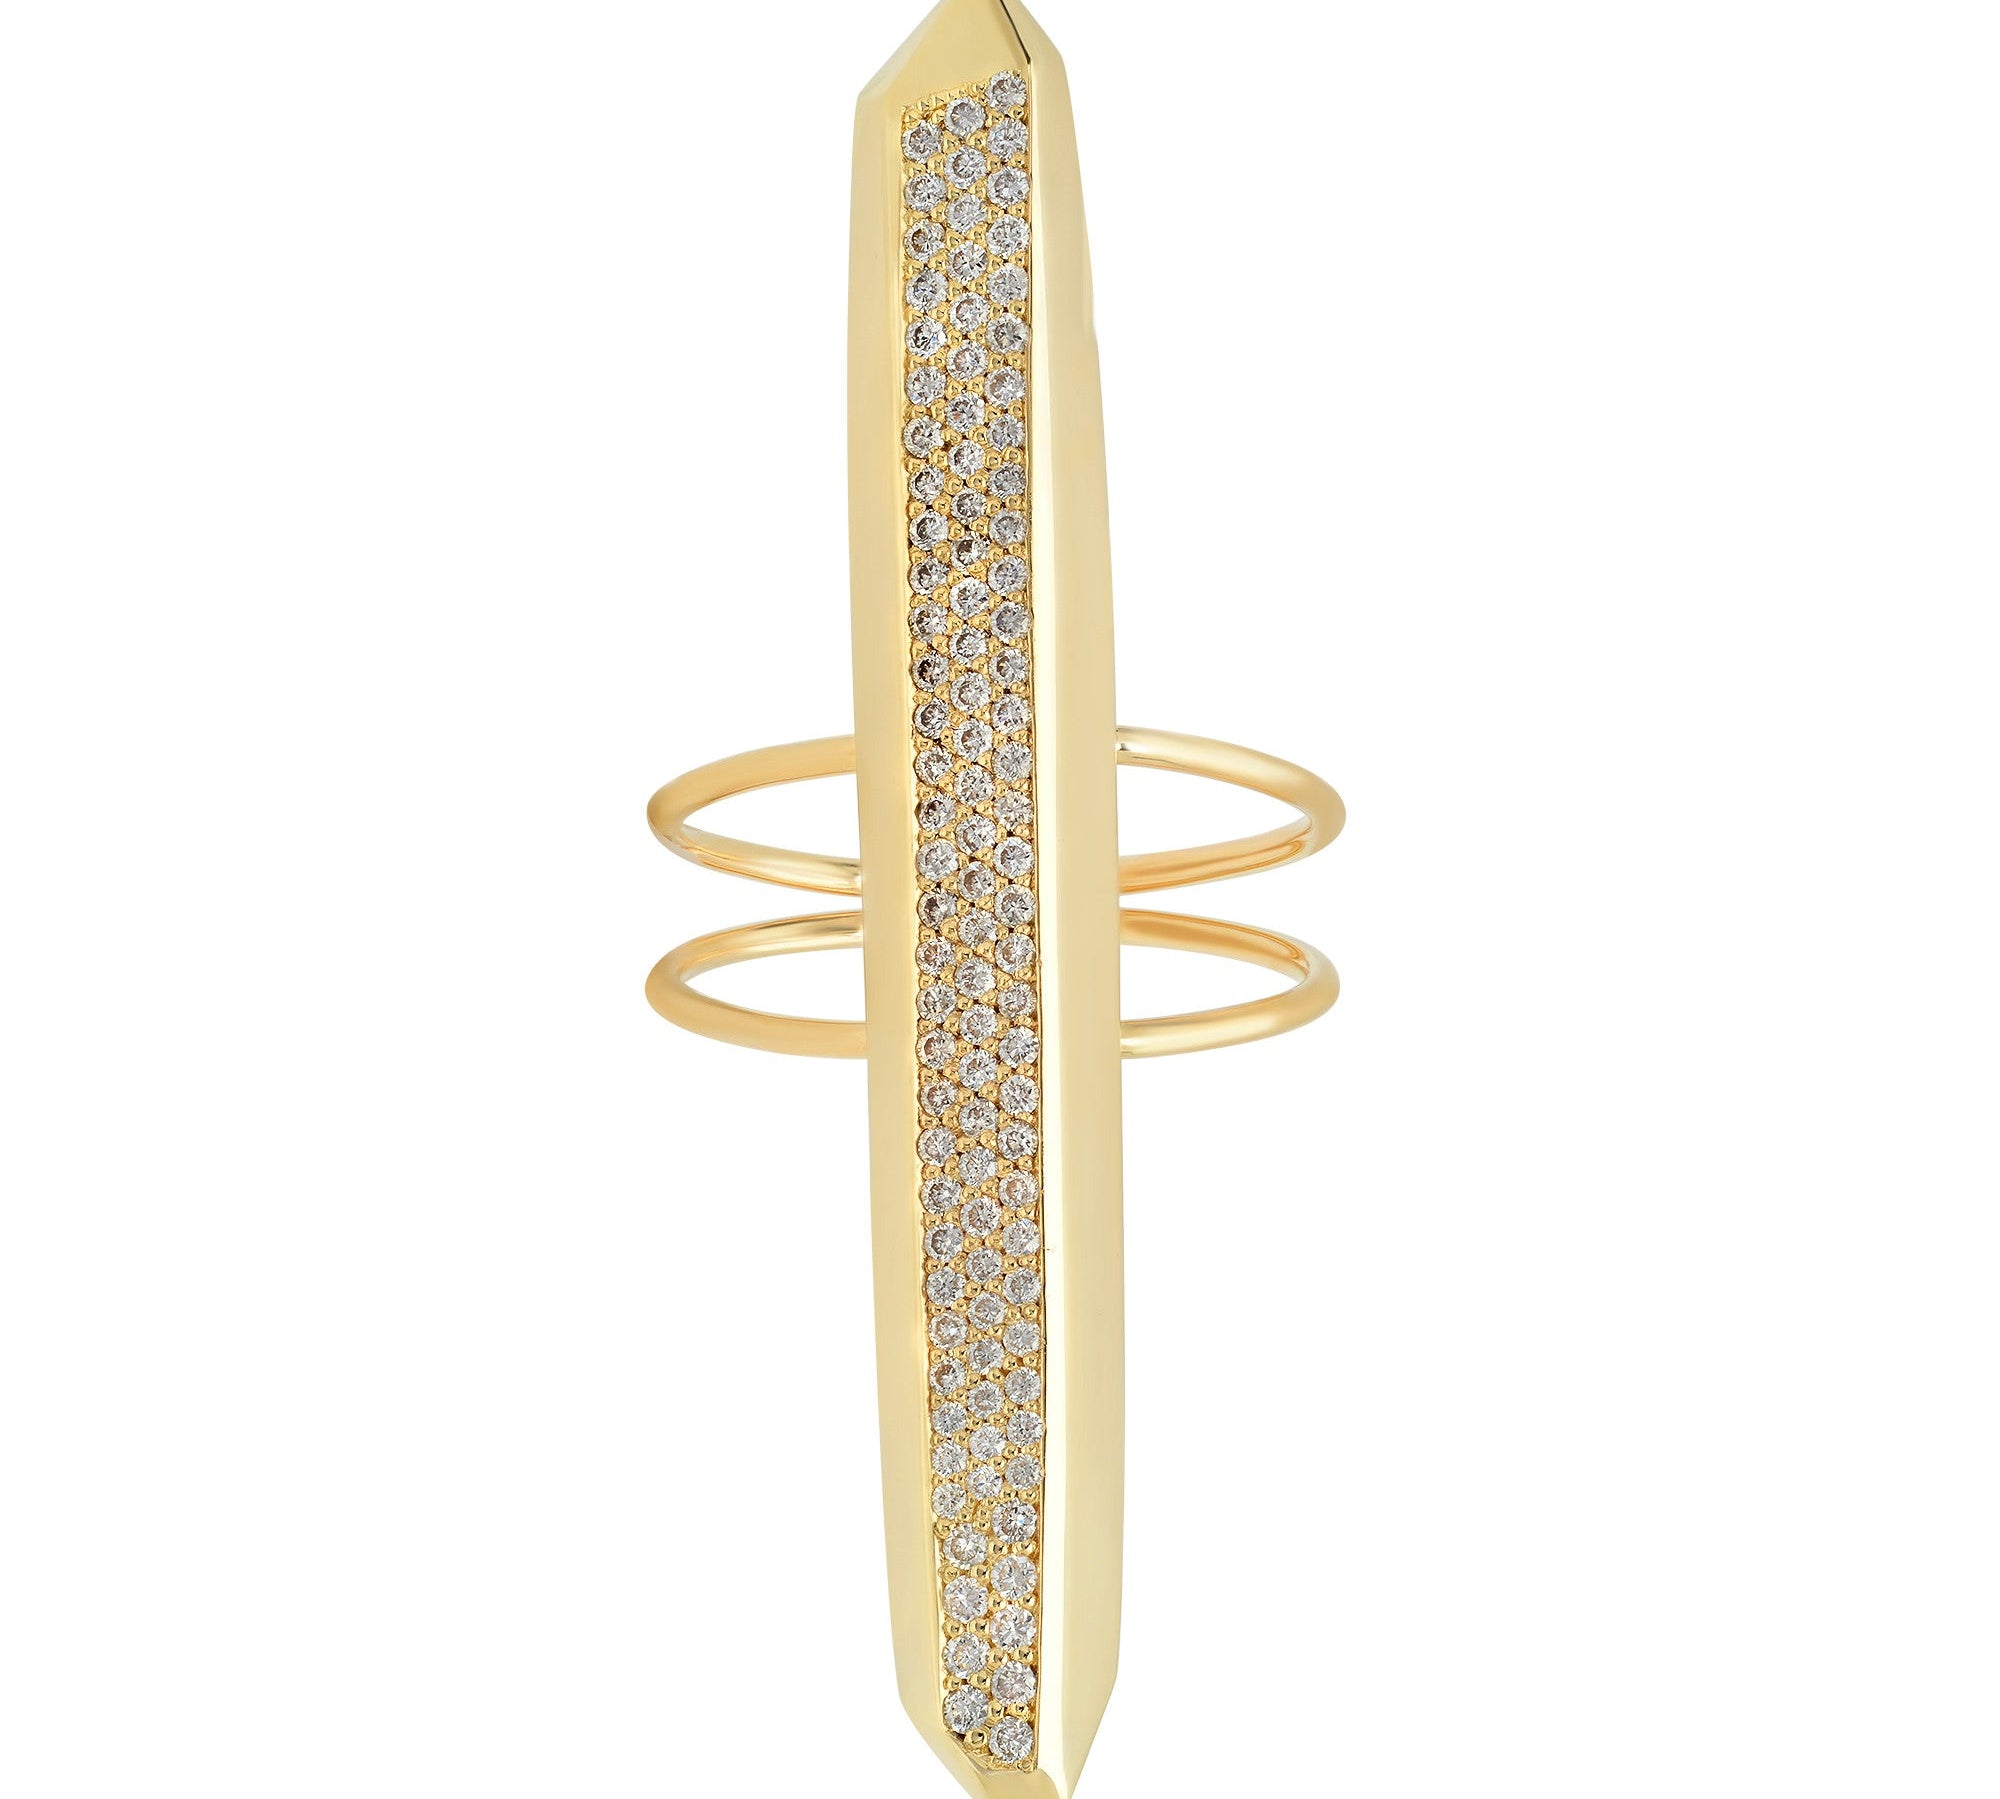 Diamond Crystalline Ring Statement Elisabeth Bell Jewelry 5 Yellow Gold 